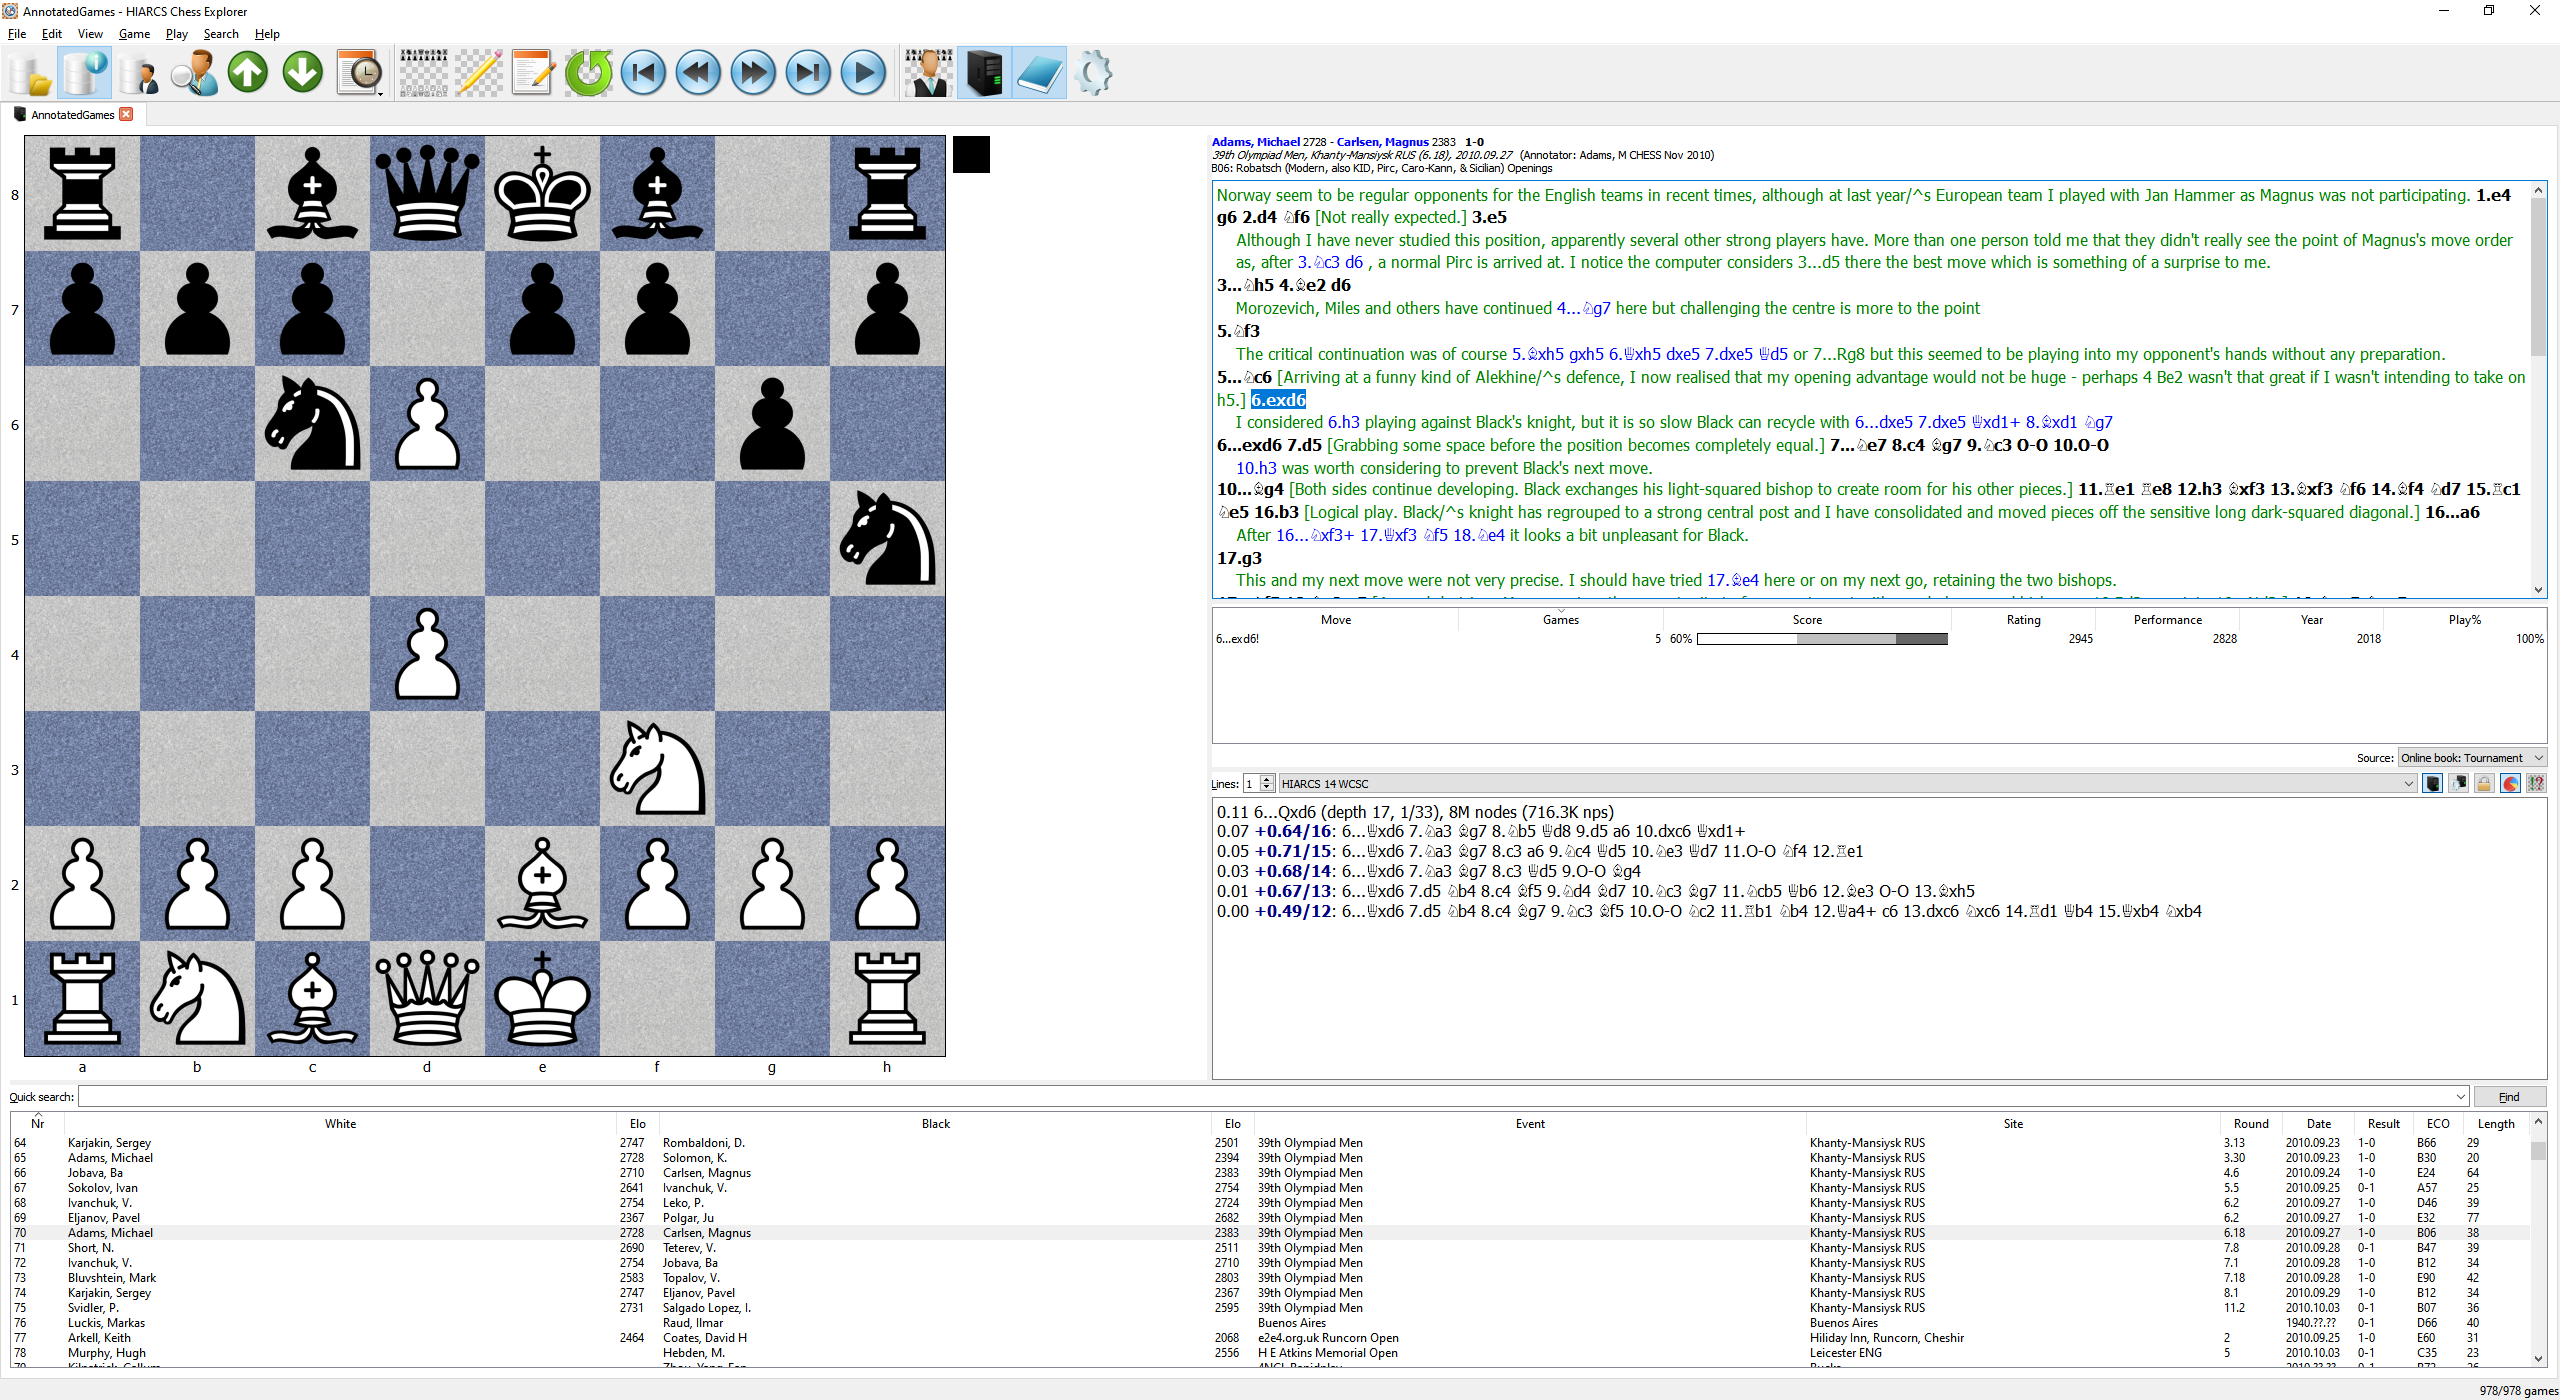 hiarcs chess explorer maximum database size